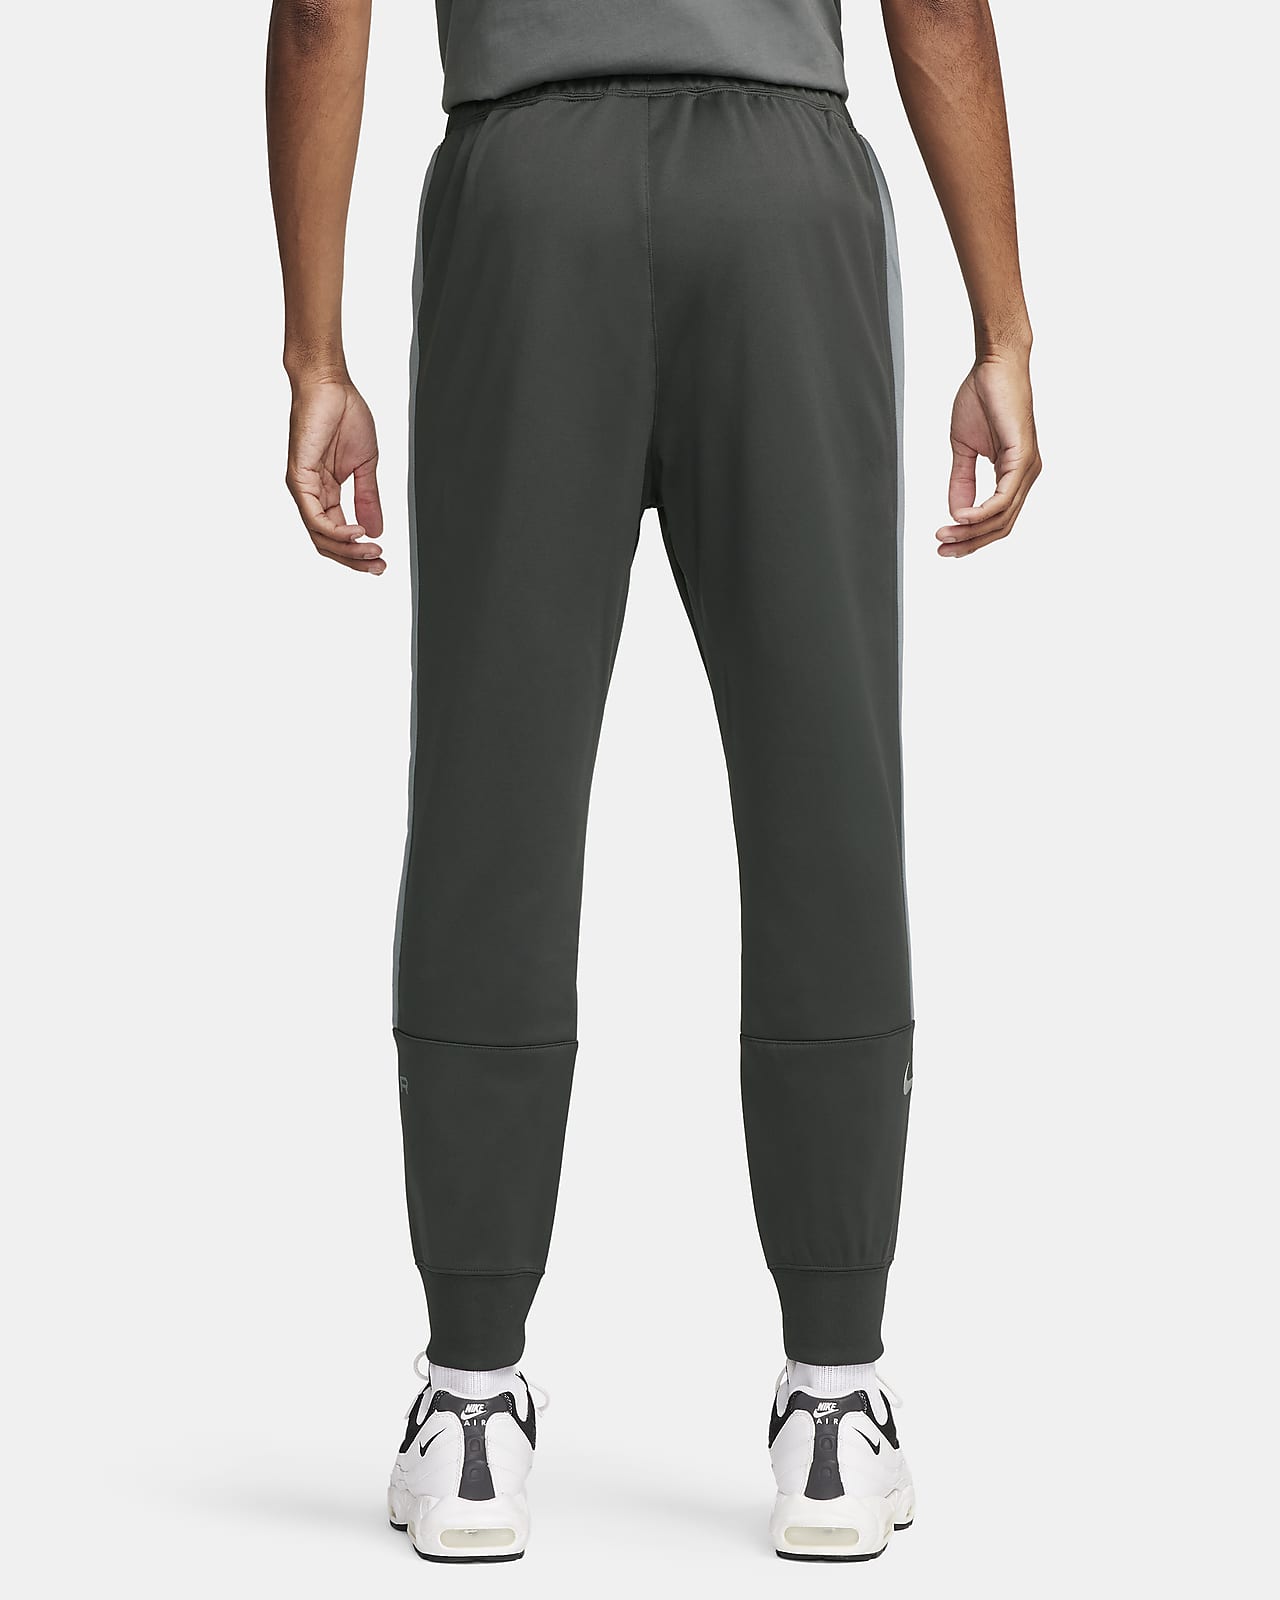 Buy adidas Men's Climacool 3/4 Workout Pants Black in KSA -SSS